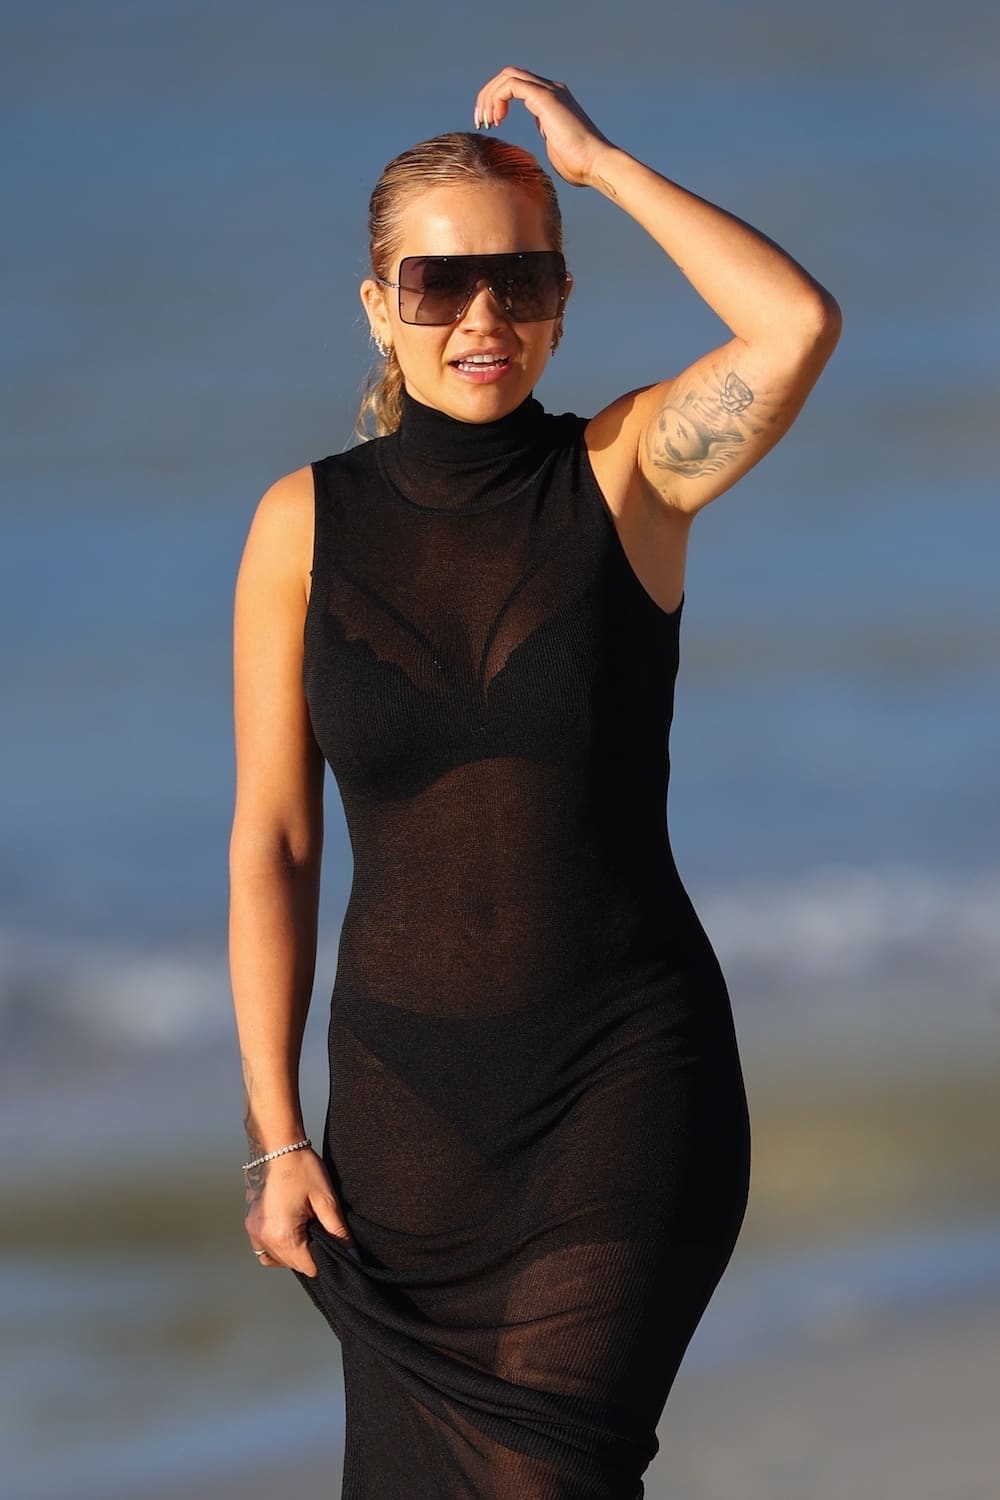 Rita Ora Sexy Sheer Style in Black Lingerie in Sydney Australia 2021